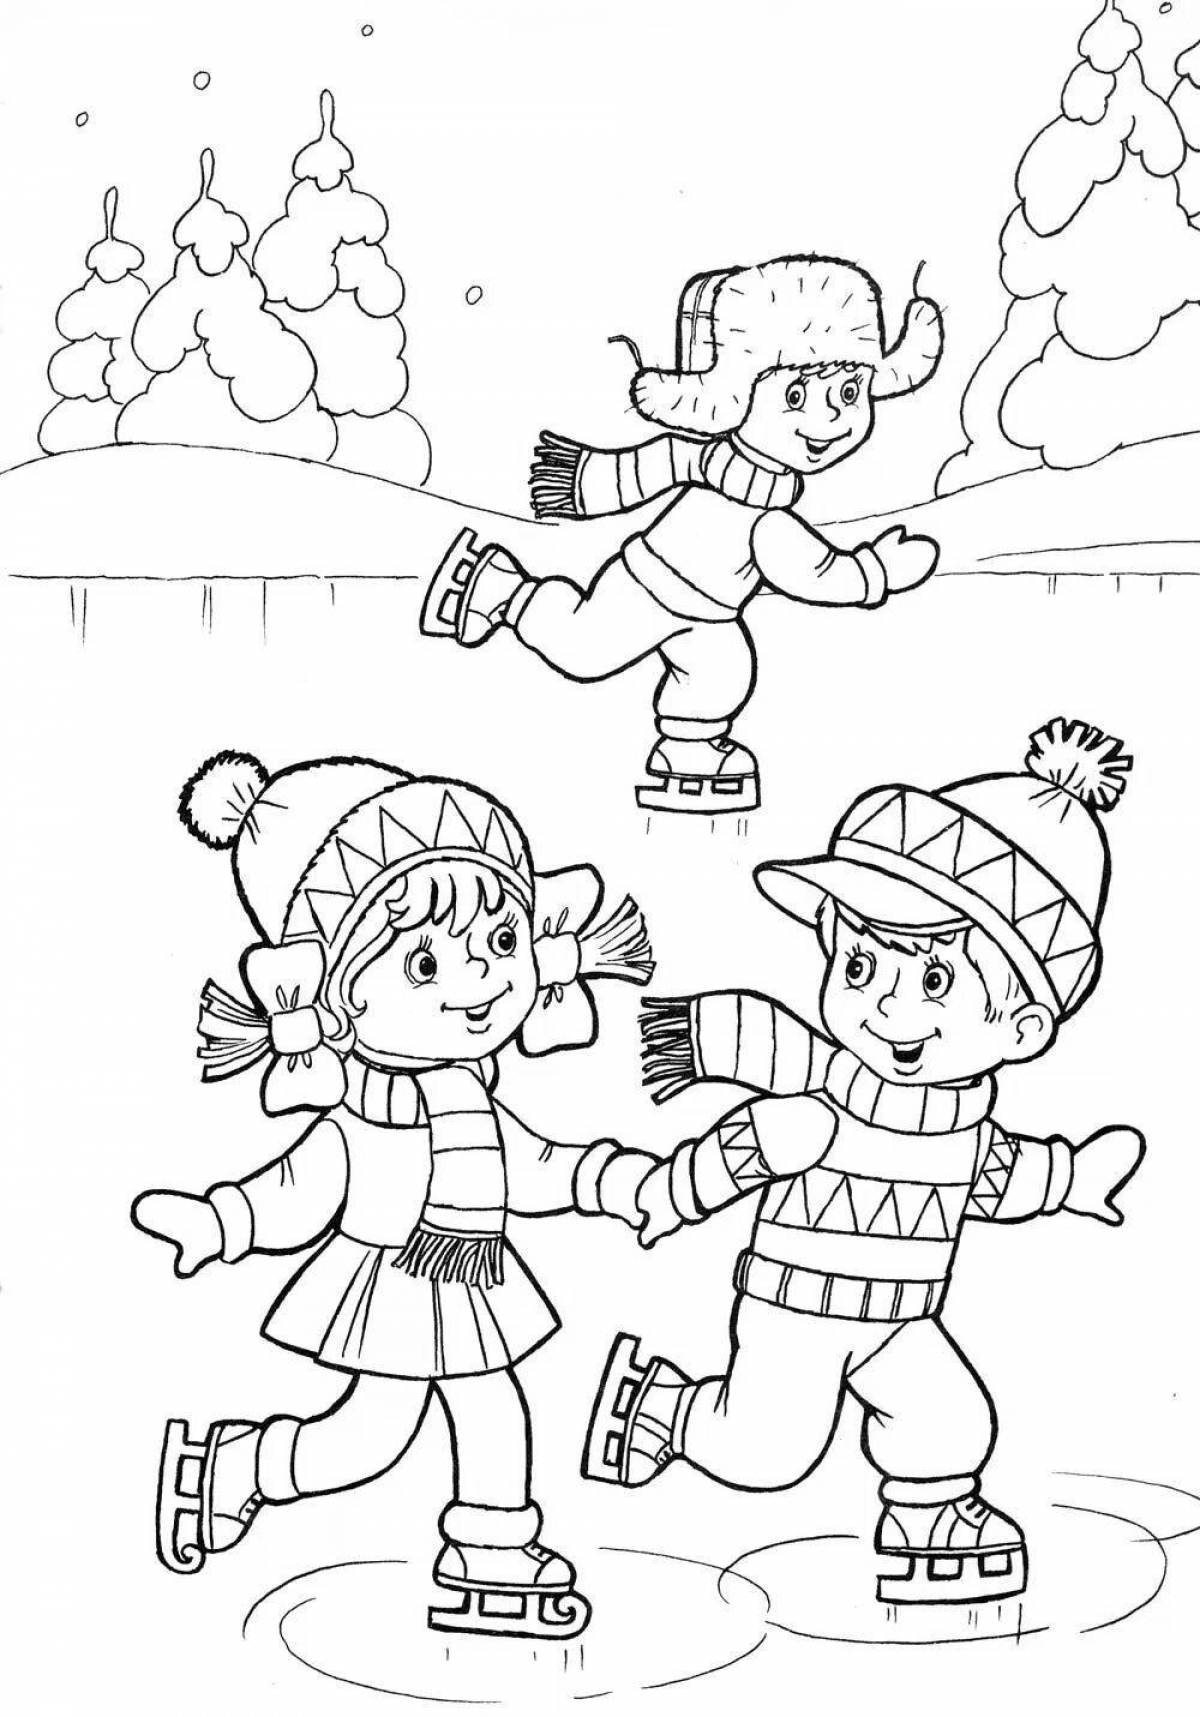 Joyful coloring for children outdoors in winter